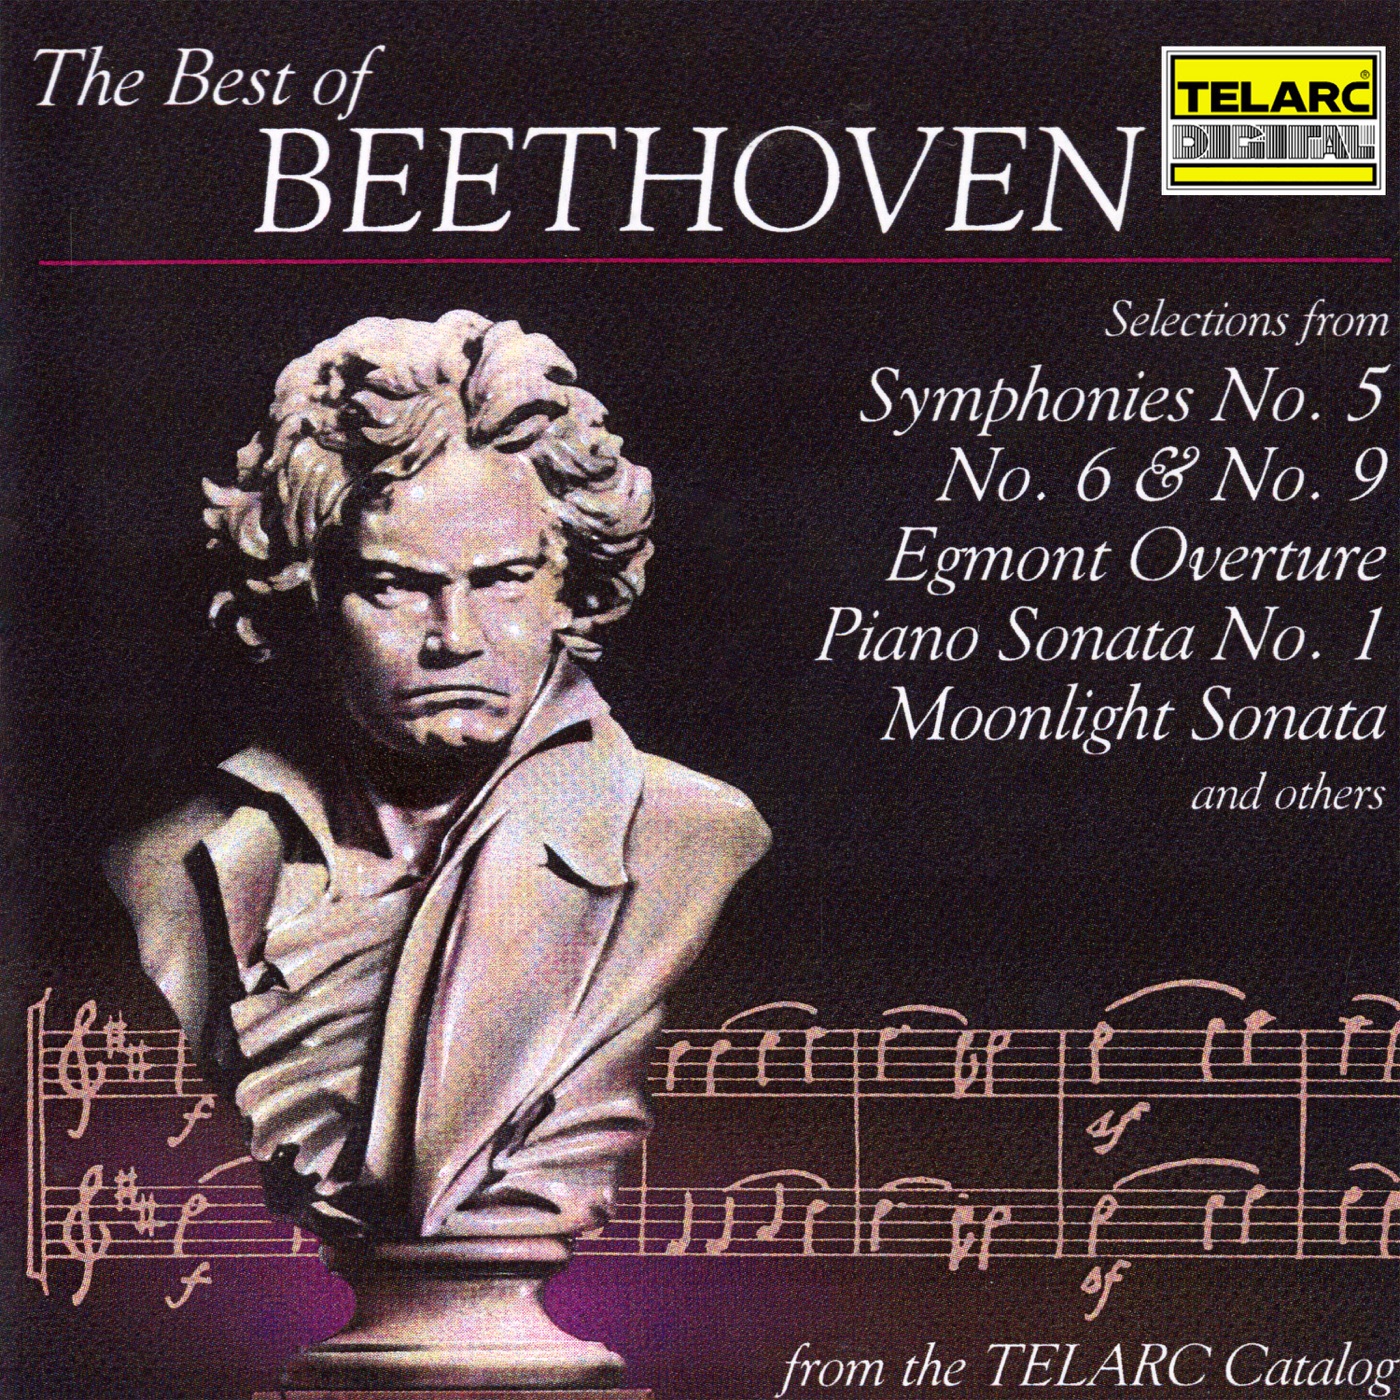 The Best of Beethoven by Ludwig van Beethoven